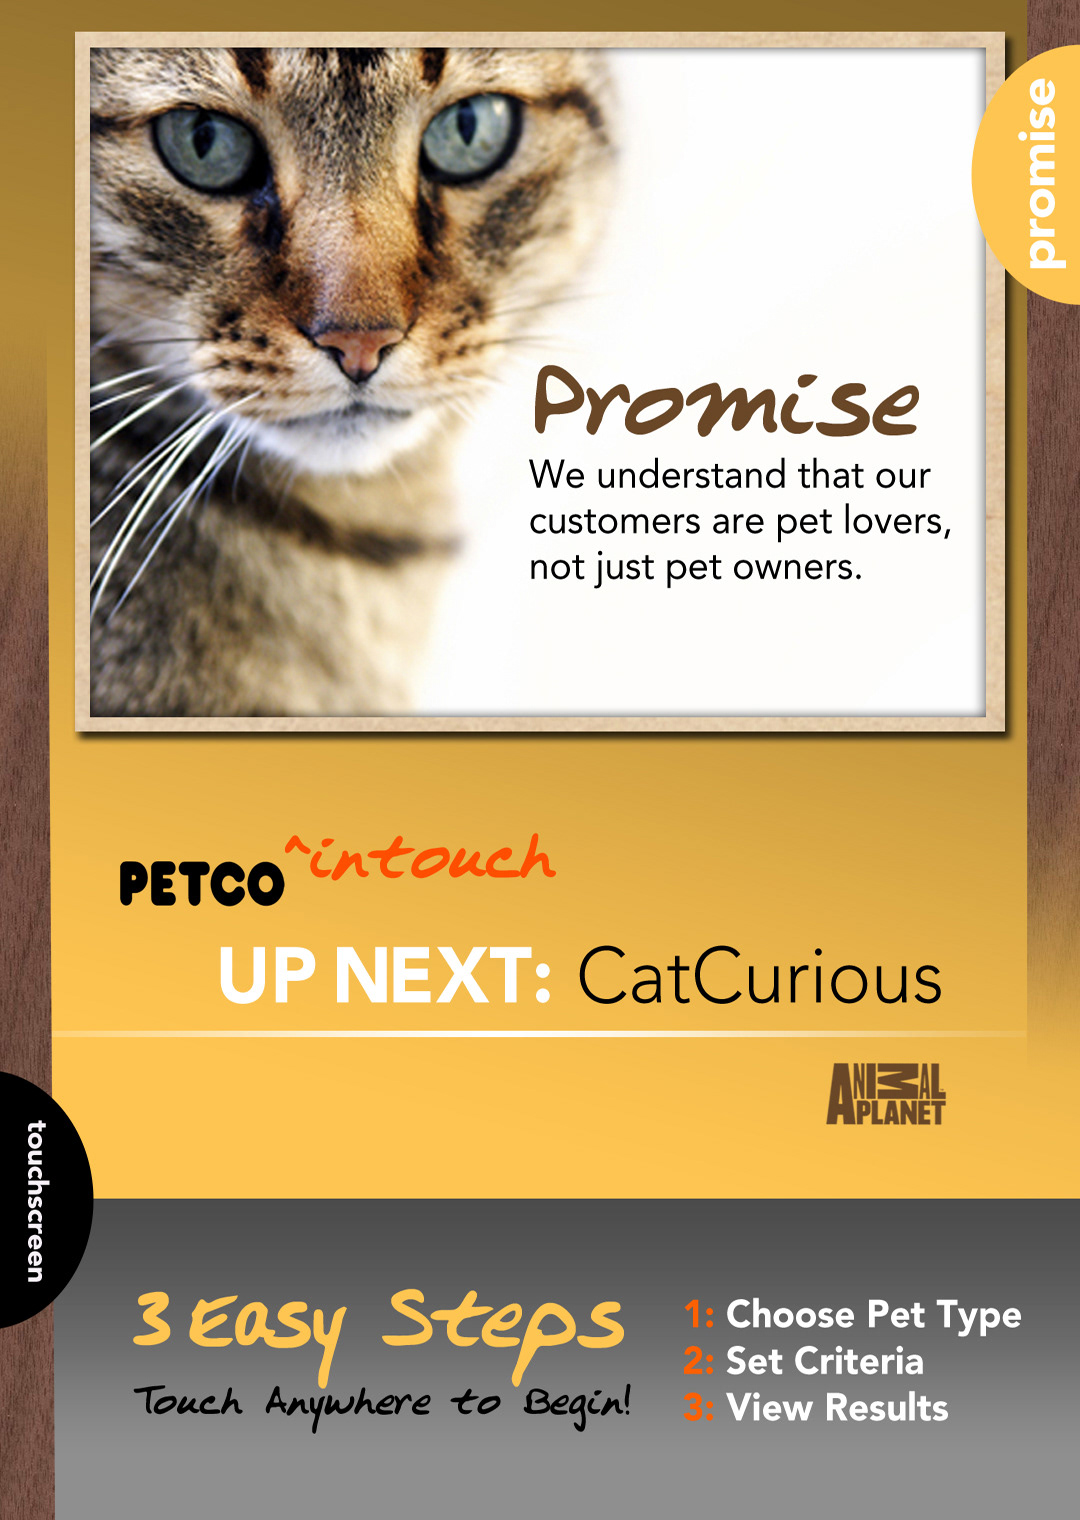 petco pets Retail digital signage content creation retail media